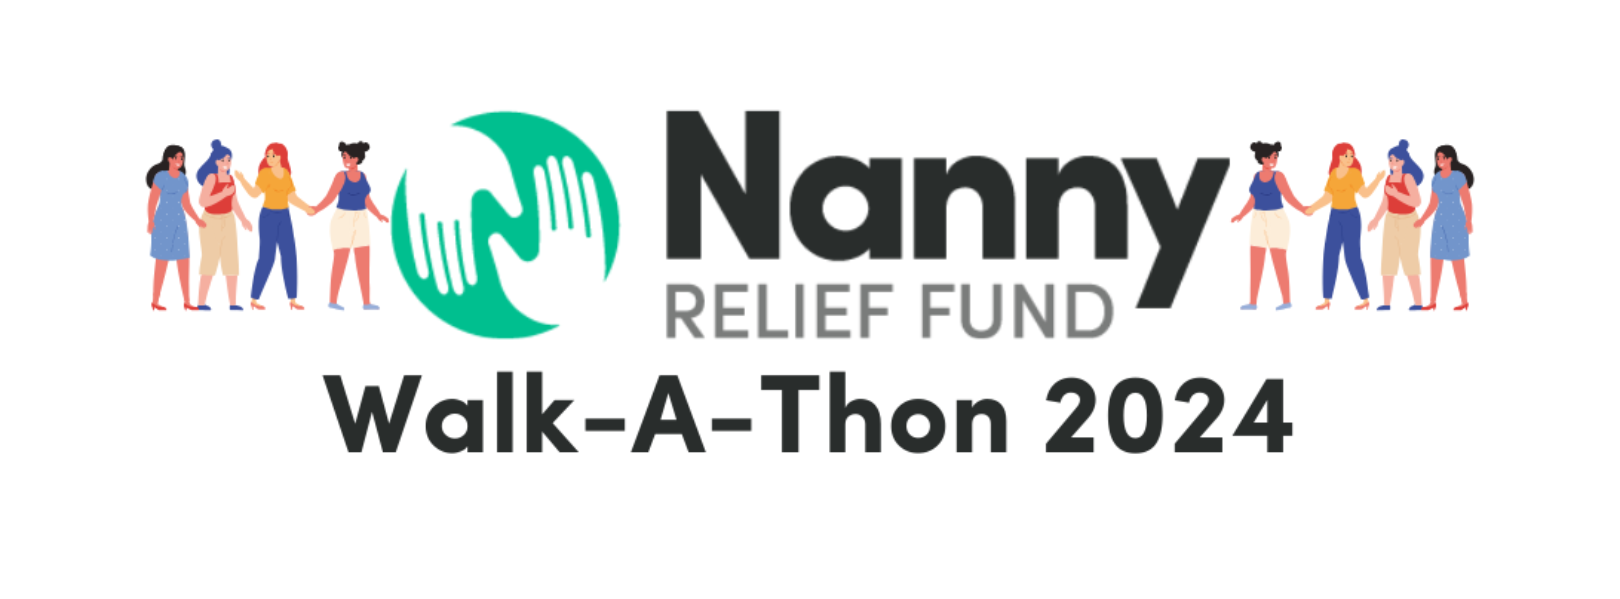 Nanny Relief Fund Walk-A-Thon 2024